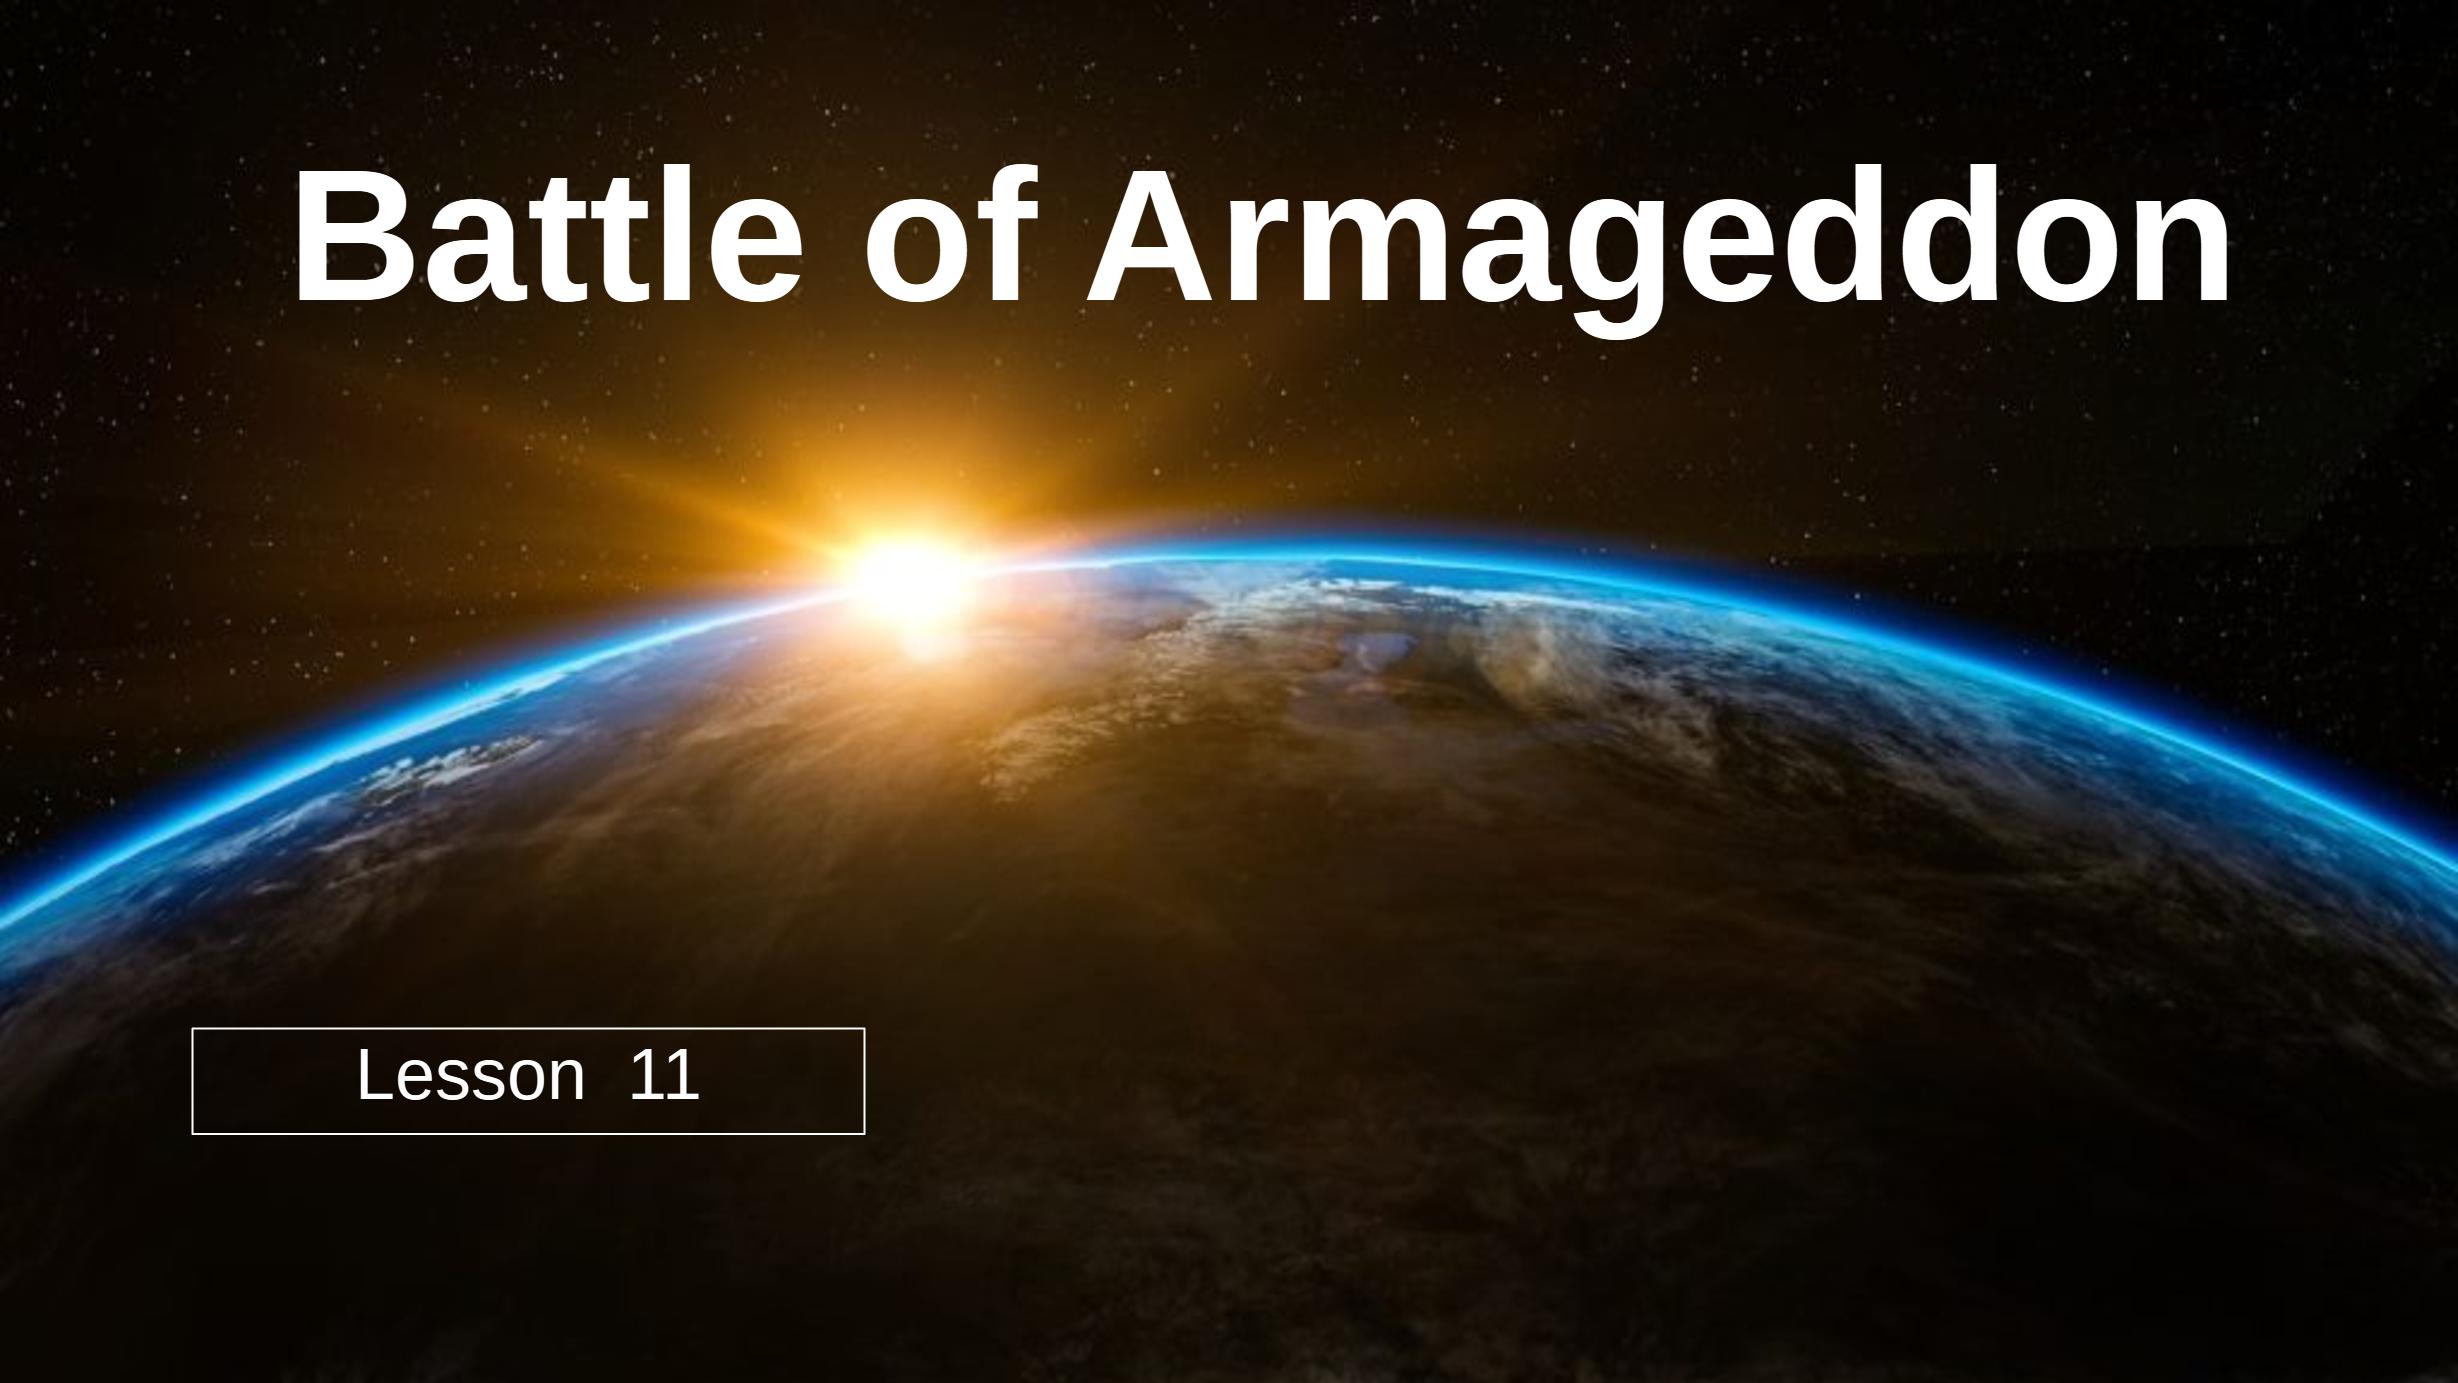 11 The Battle of Armageddon